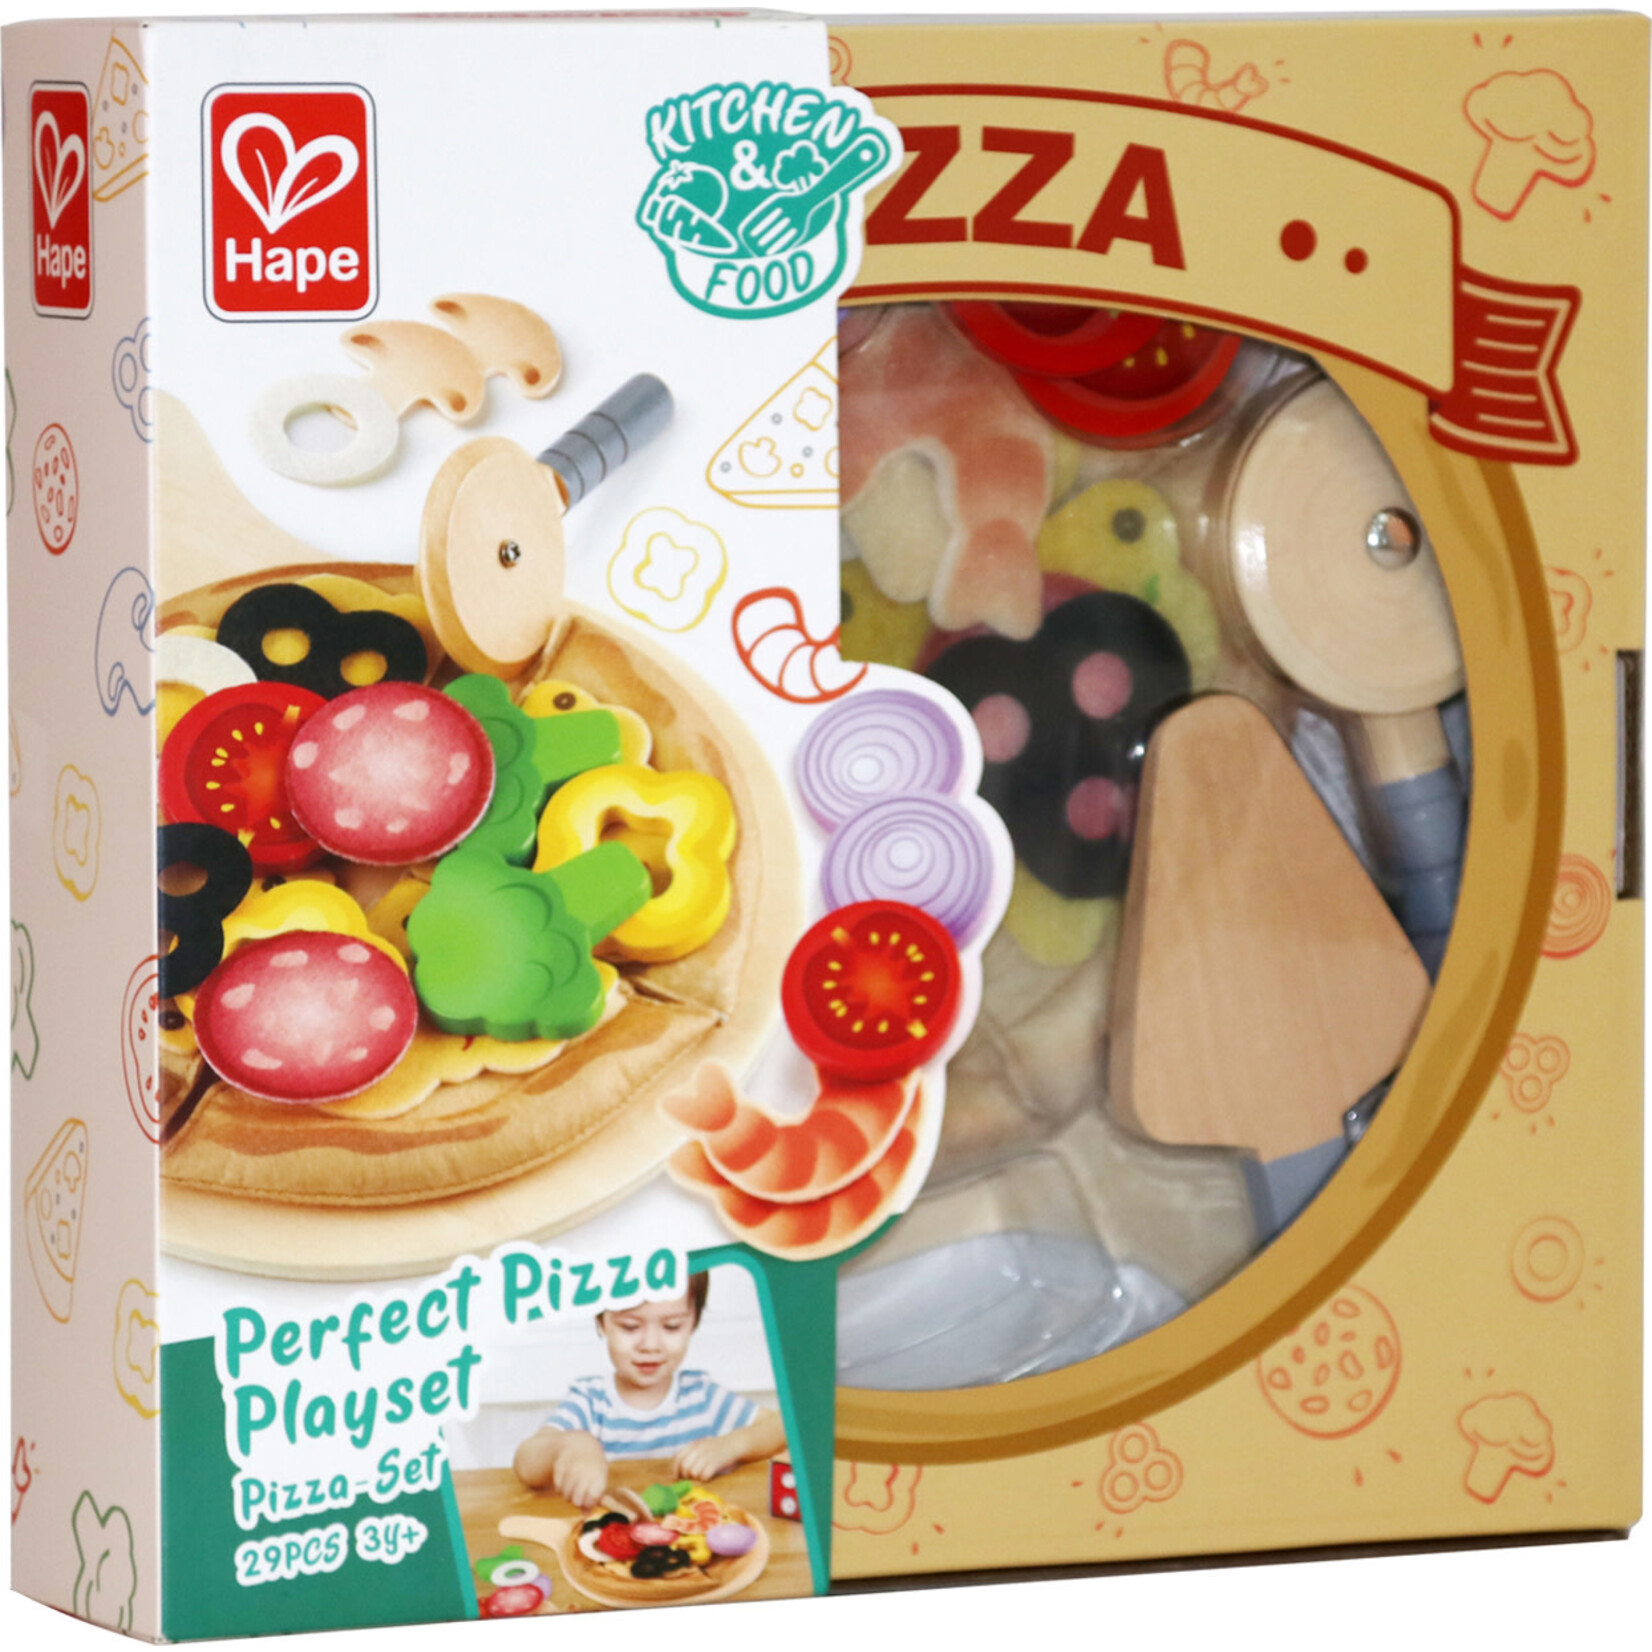 Hape Perfect Pizza Play set